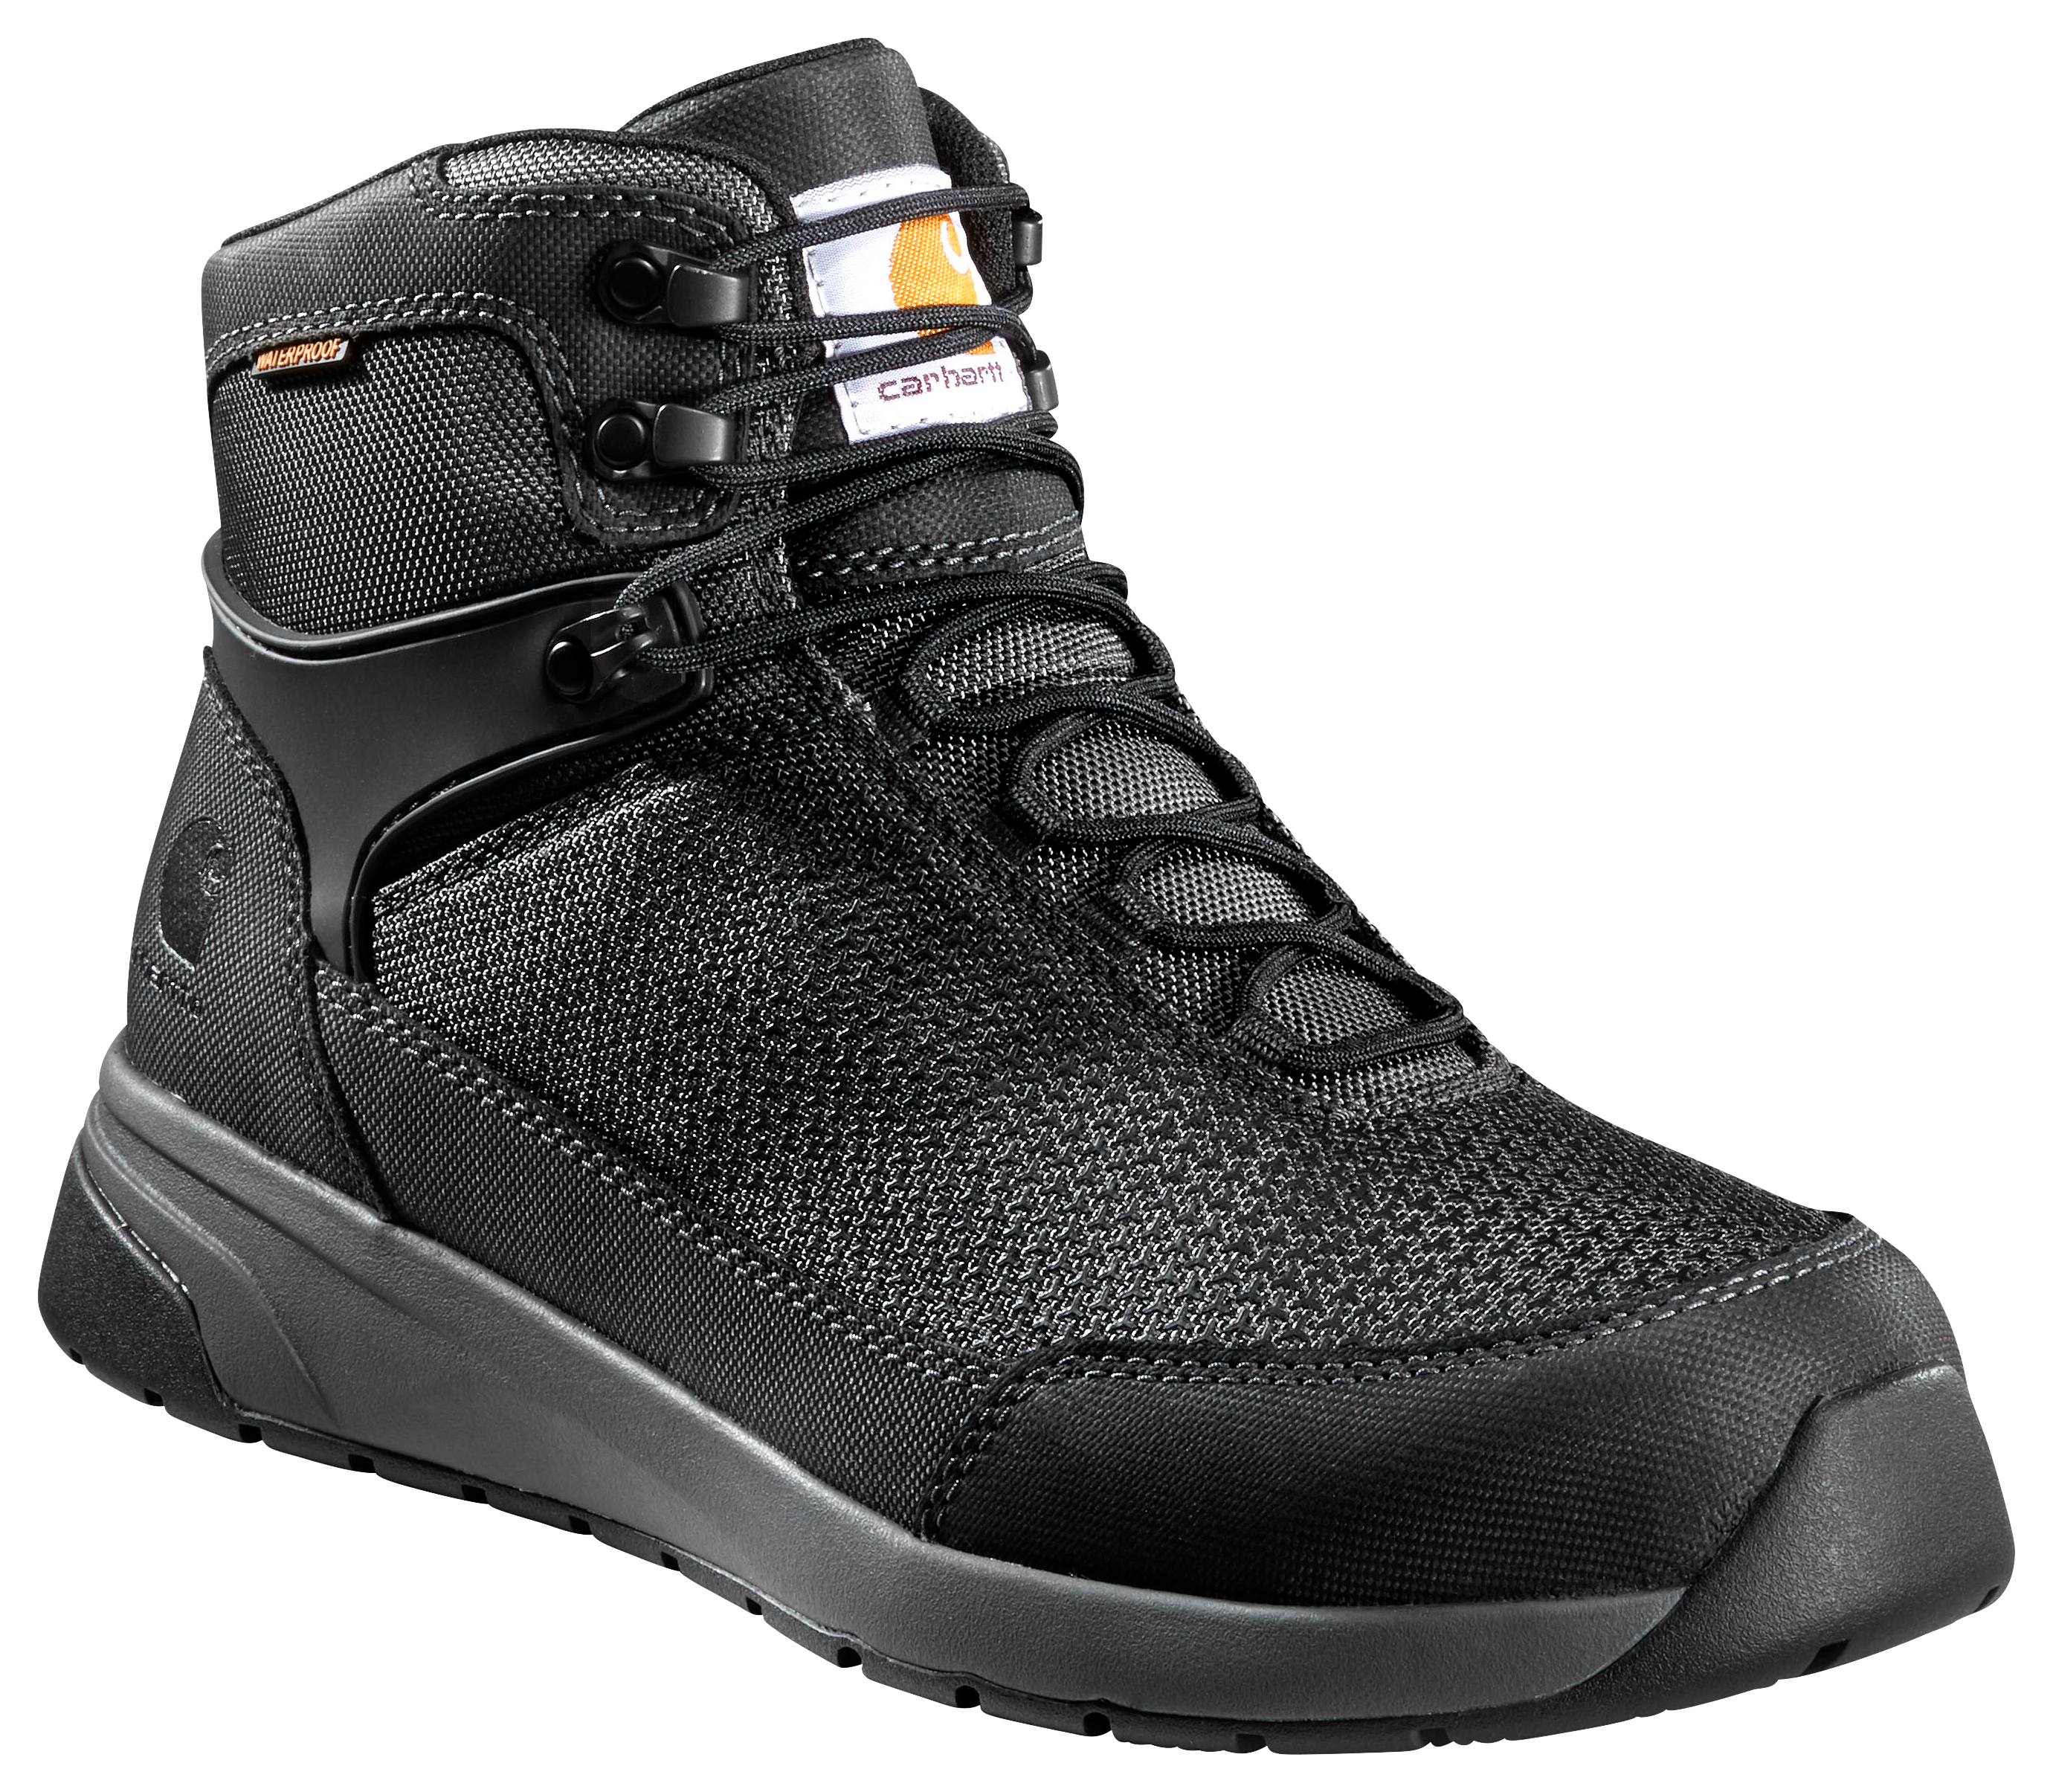 Carhartt Force 6"" Nano Composite-Toe Work Boots for Men - Black - 8M